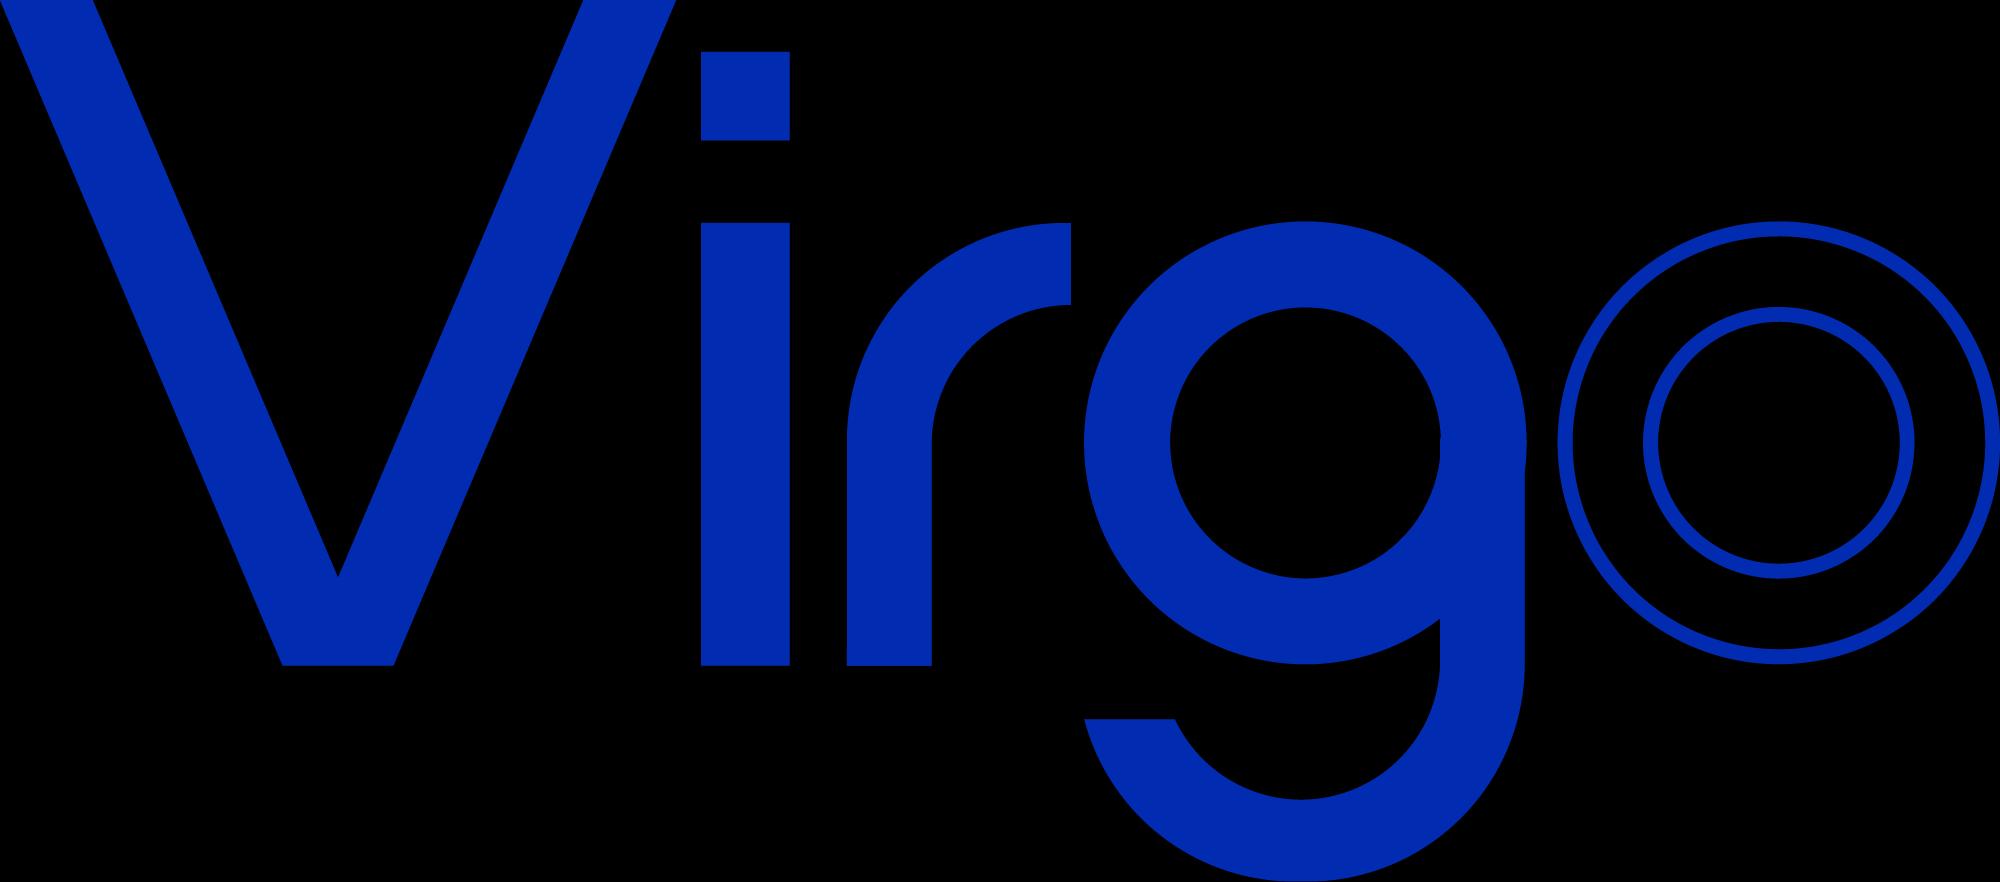 Virgo_logo